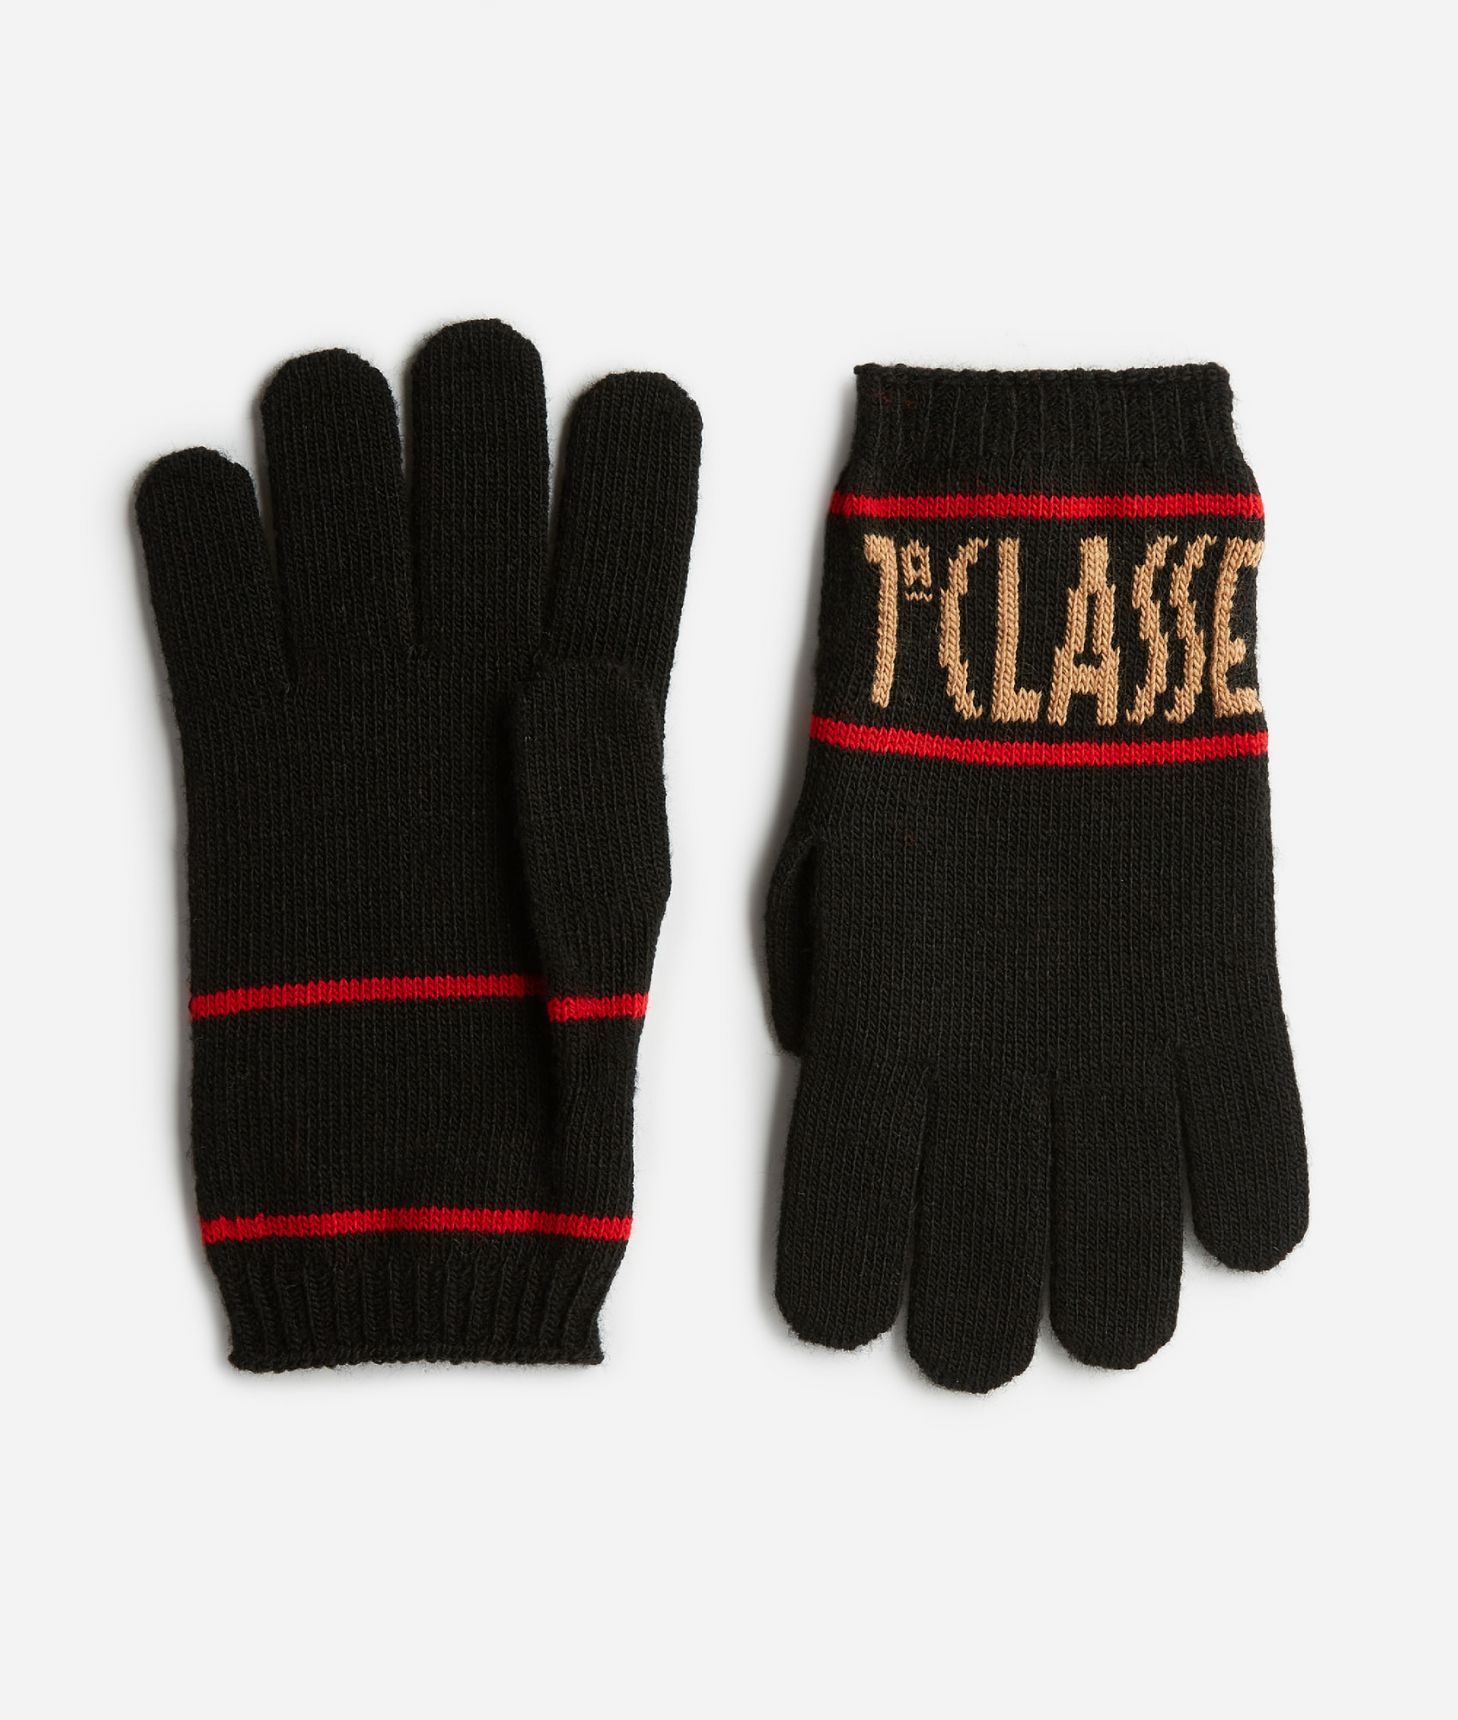 1ᴬ Classe gloves Black,front